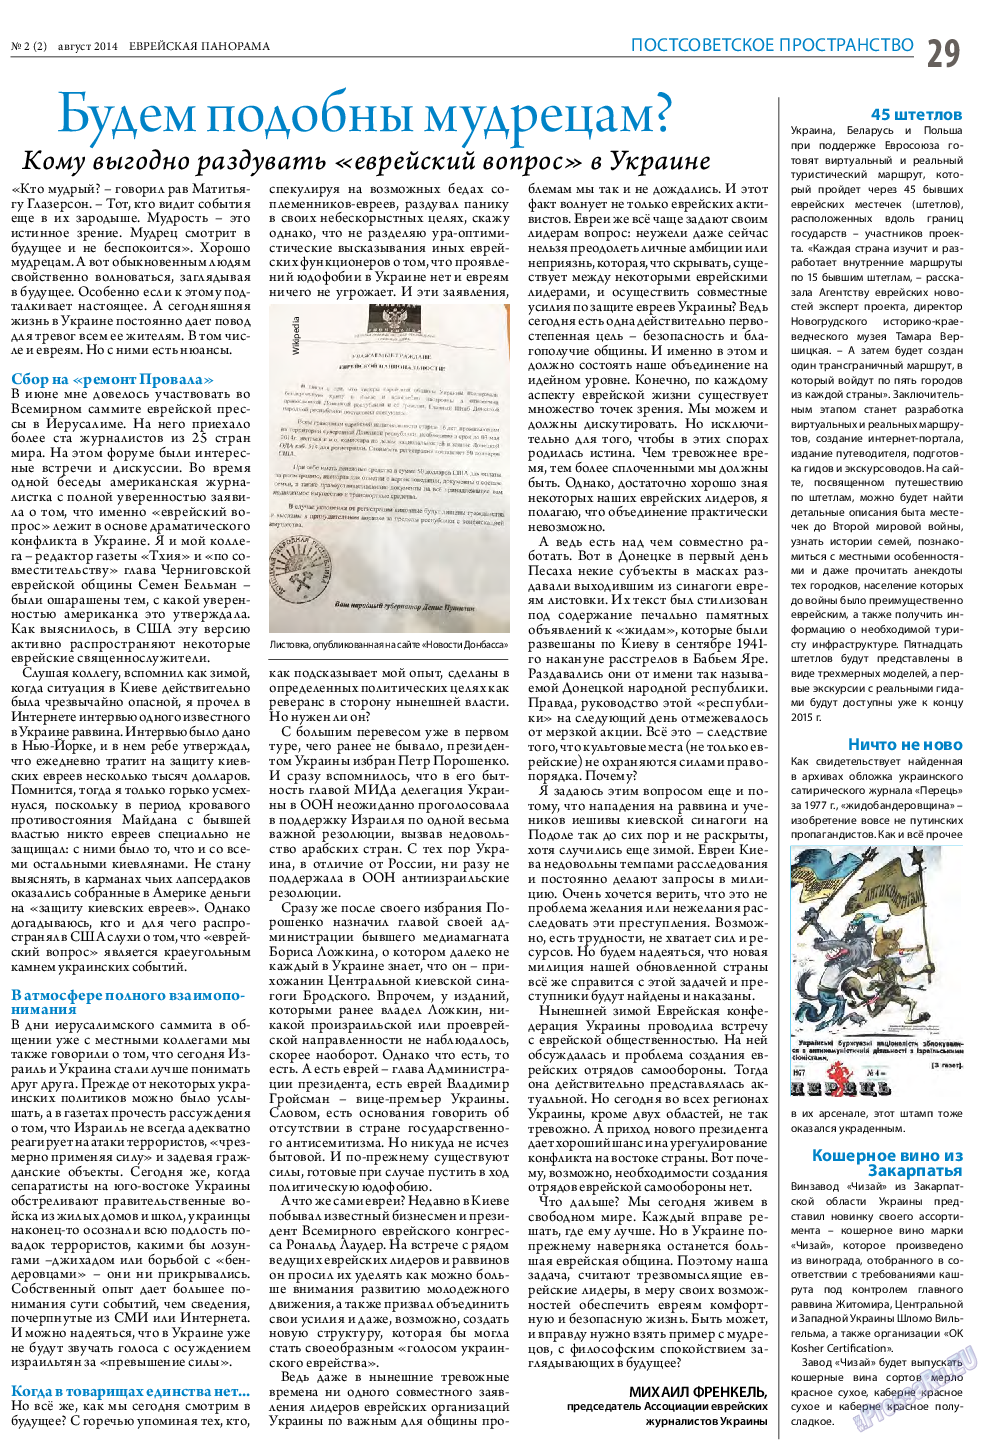 Еврейская панорама, газета. 2014 №2 стр.29